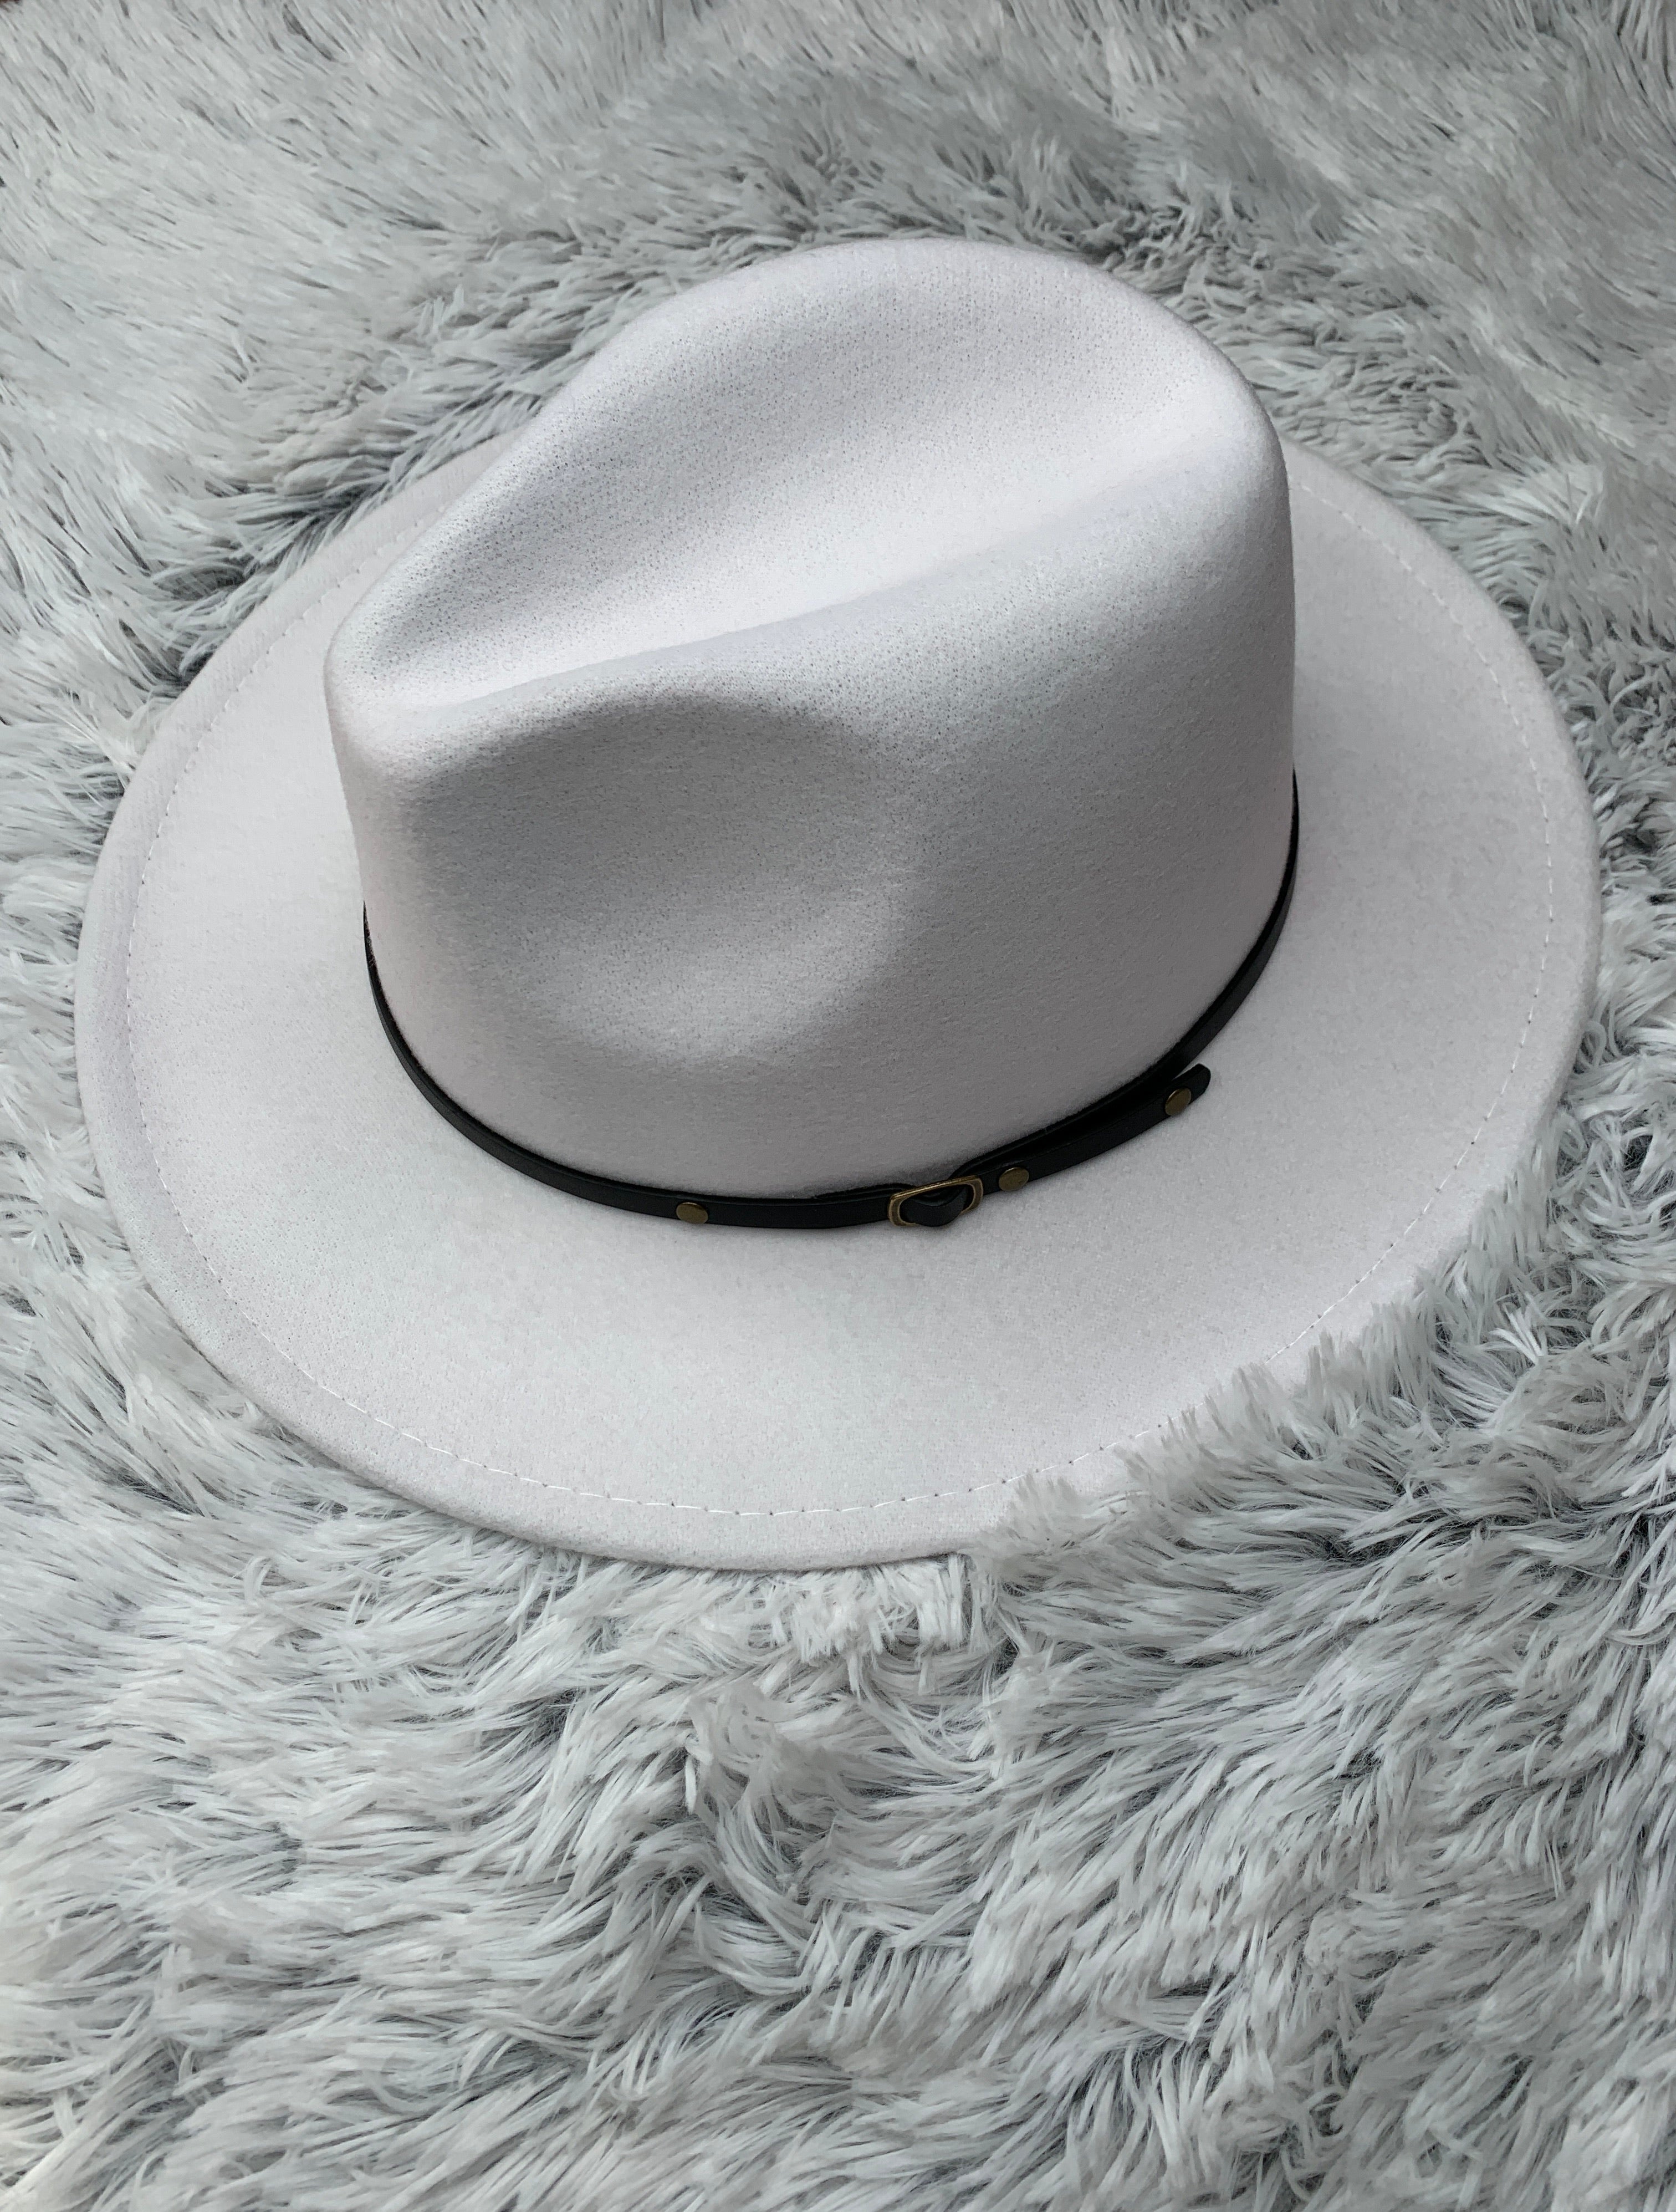 Fedora Hats - Sexy+Sweet Winks